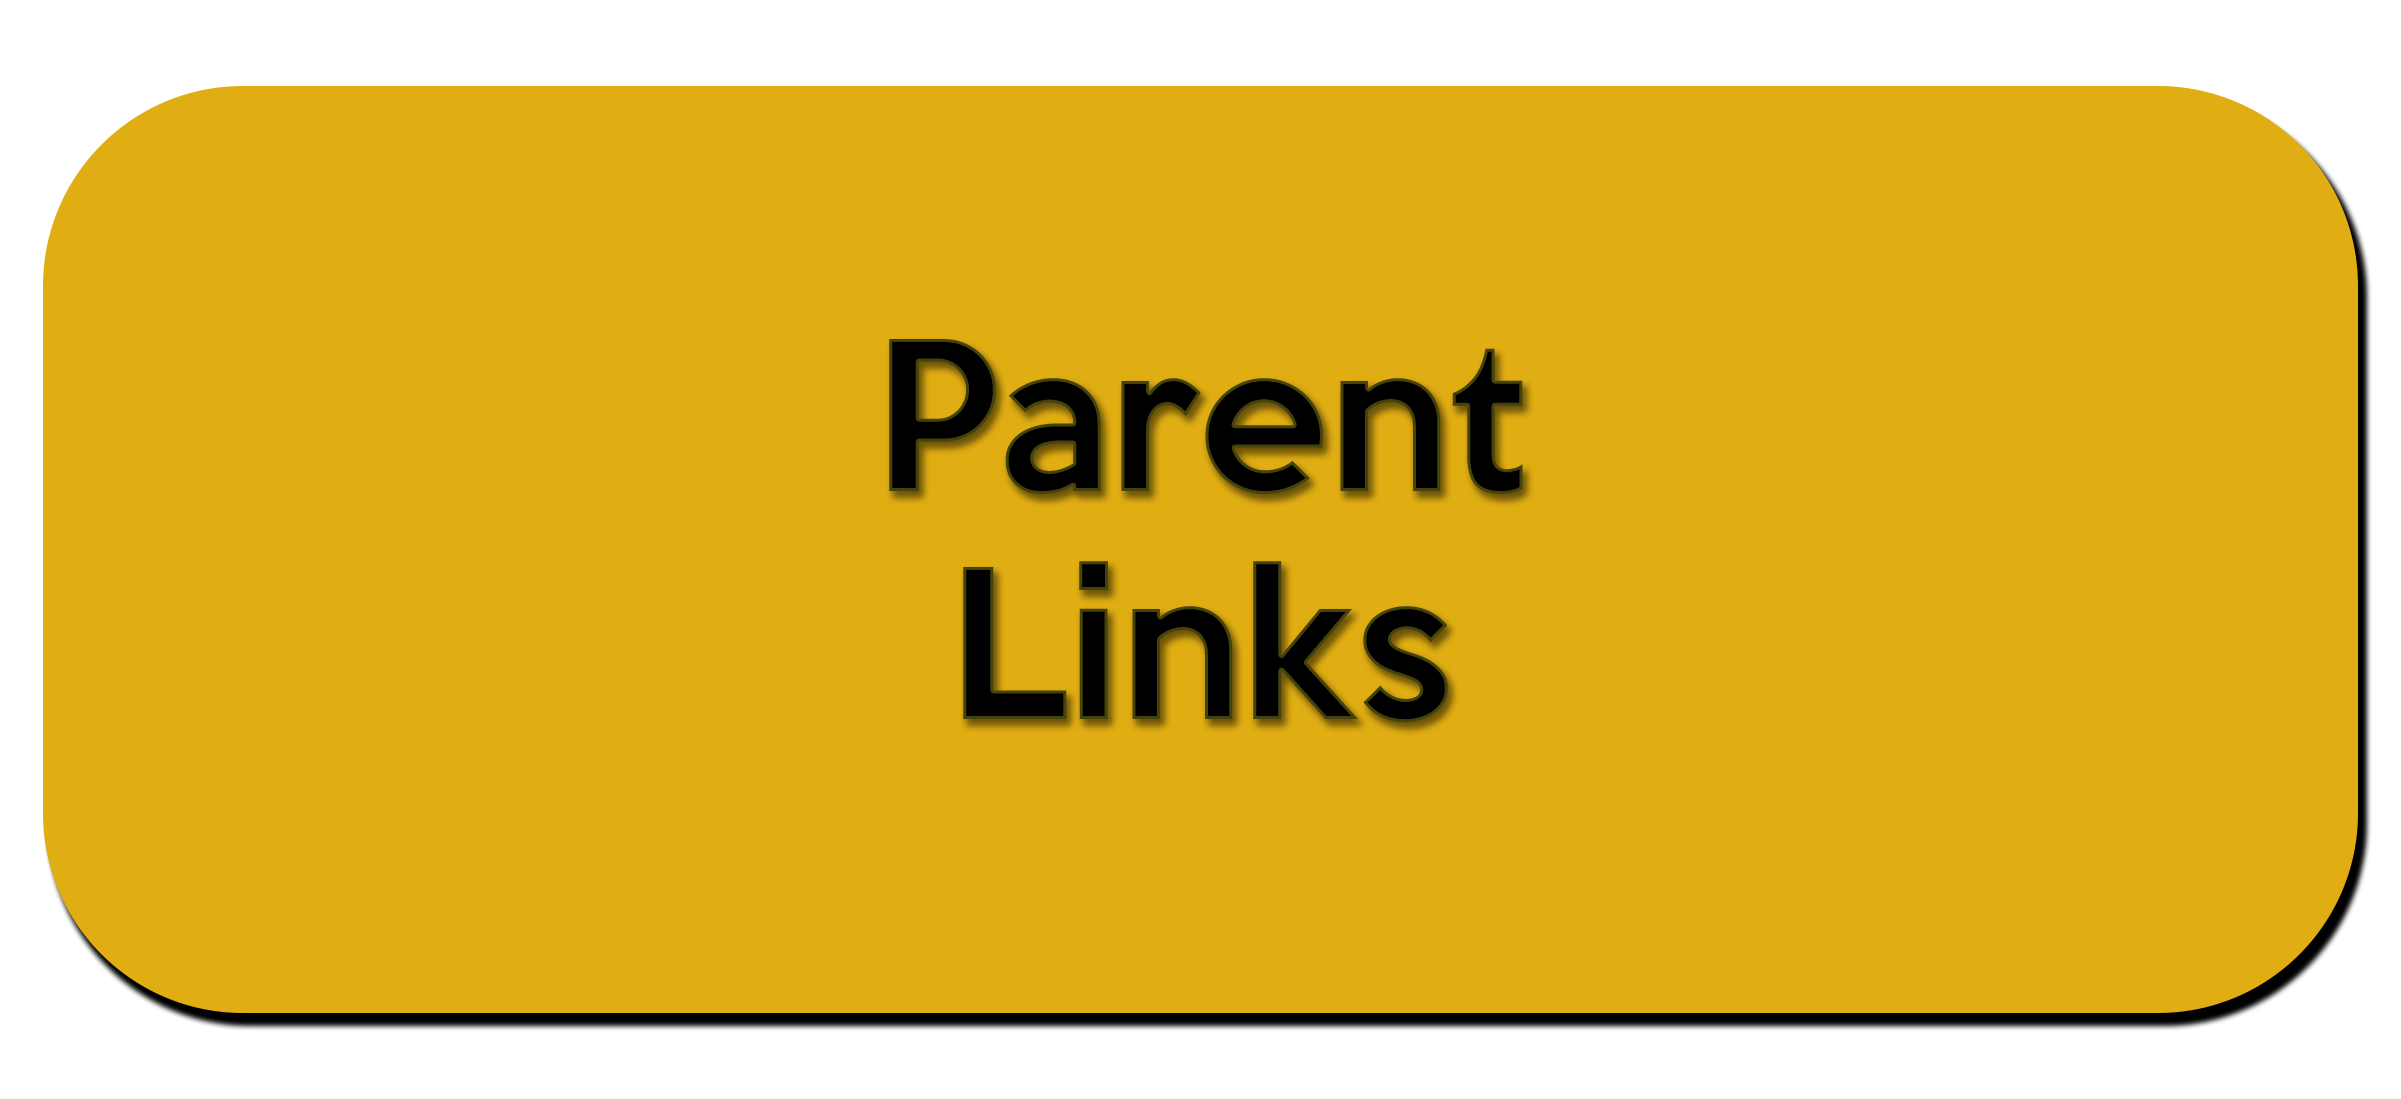 http://www.stmaryschoolaiken.com/parents/important-links.cfm